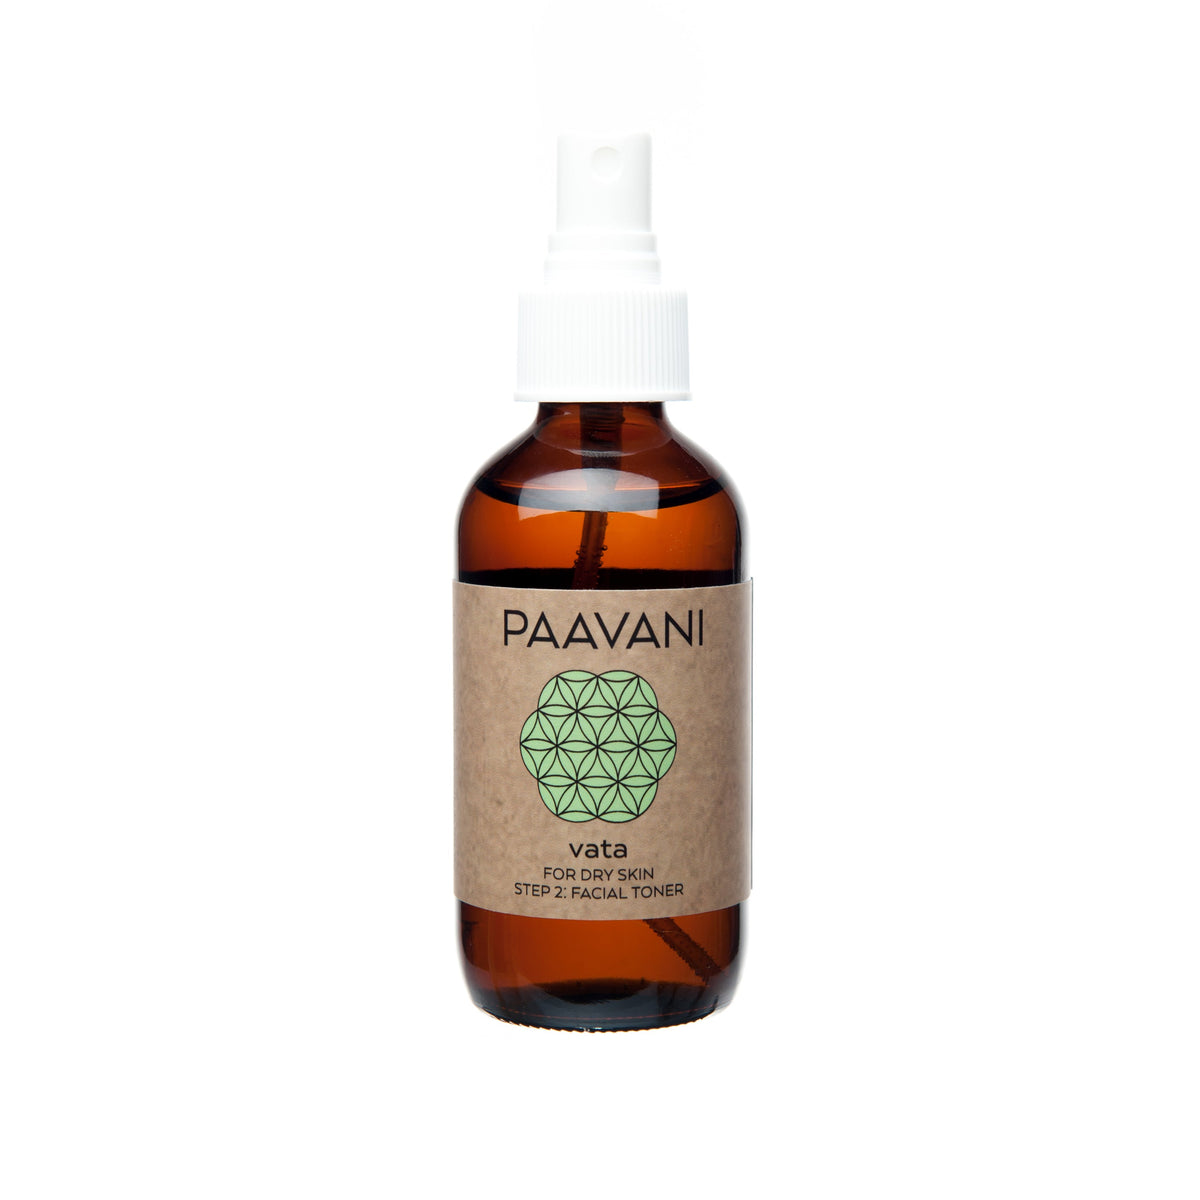 * Paavani Ayurveda - Vata Toner with Organic Chamomile and Ginger, Ayurveda, Ayurvedic Skin Care 4 fl oz.-0